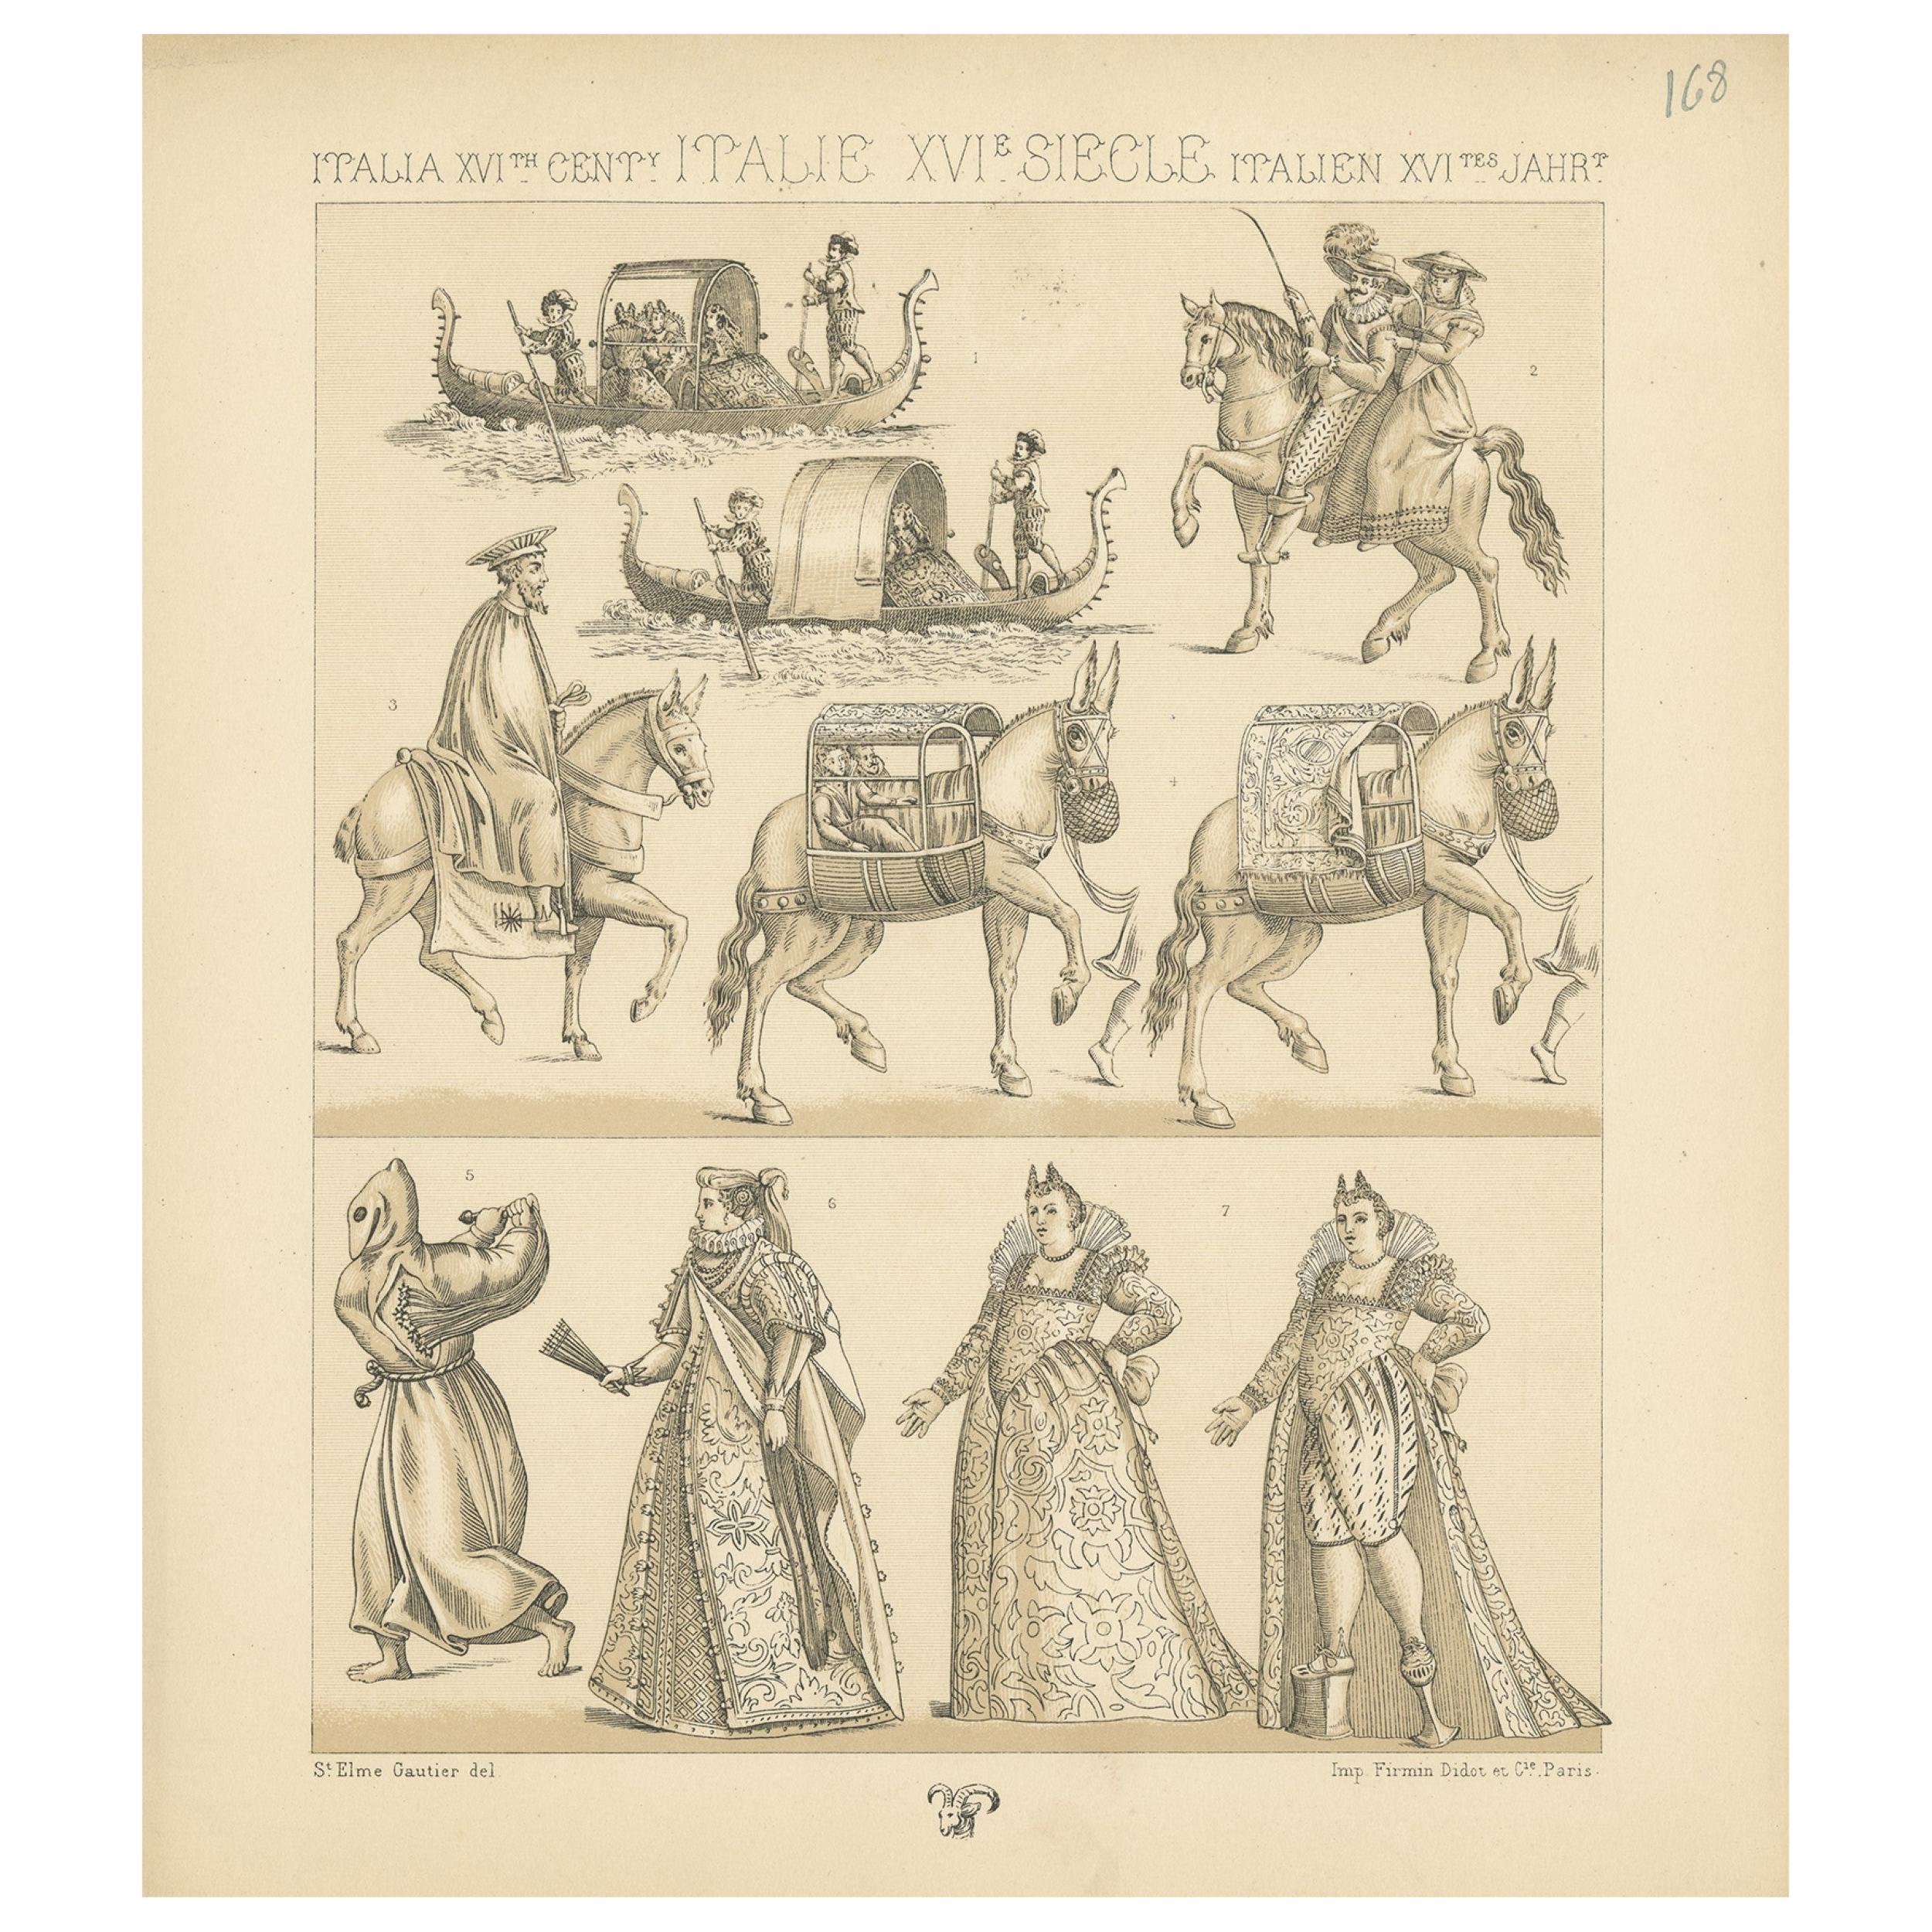 Pl. 168 Antique Print of 16th Century Italian Scenes by Racinet